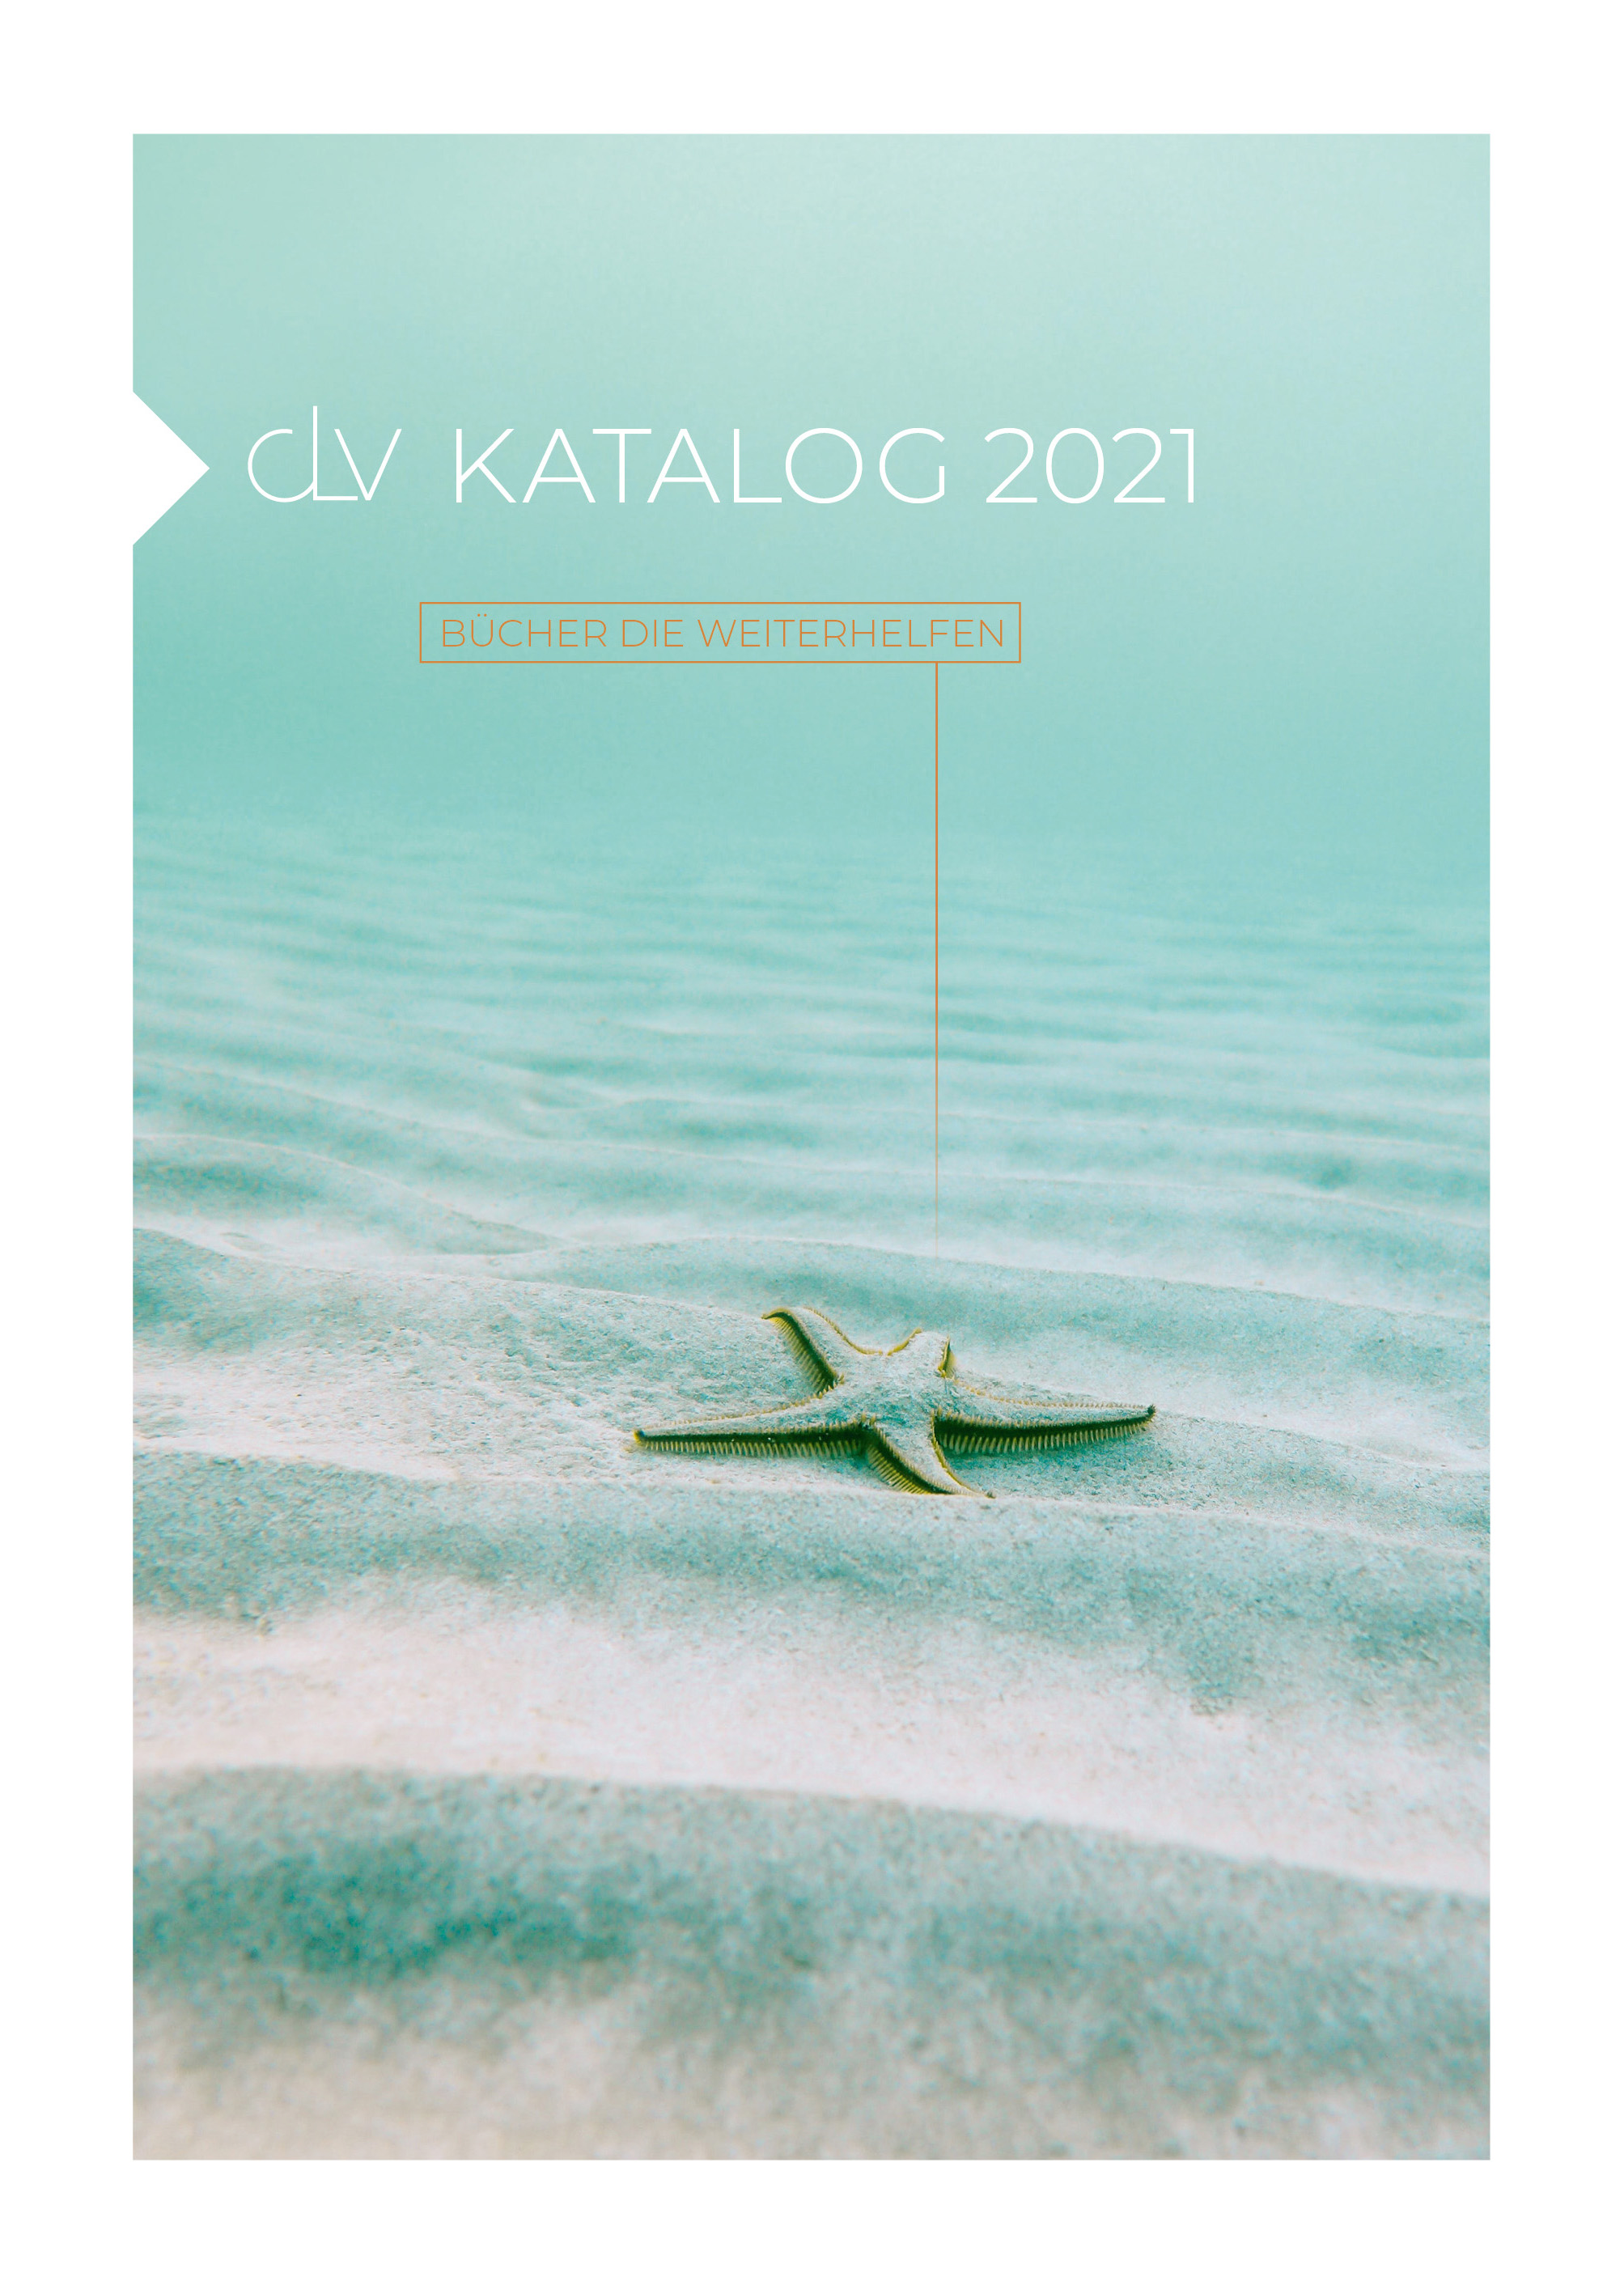 CLV-Katalog 2020/2021